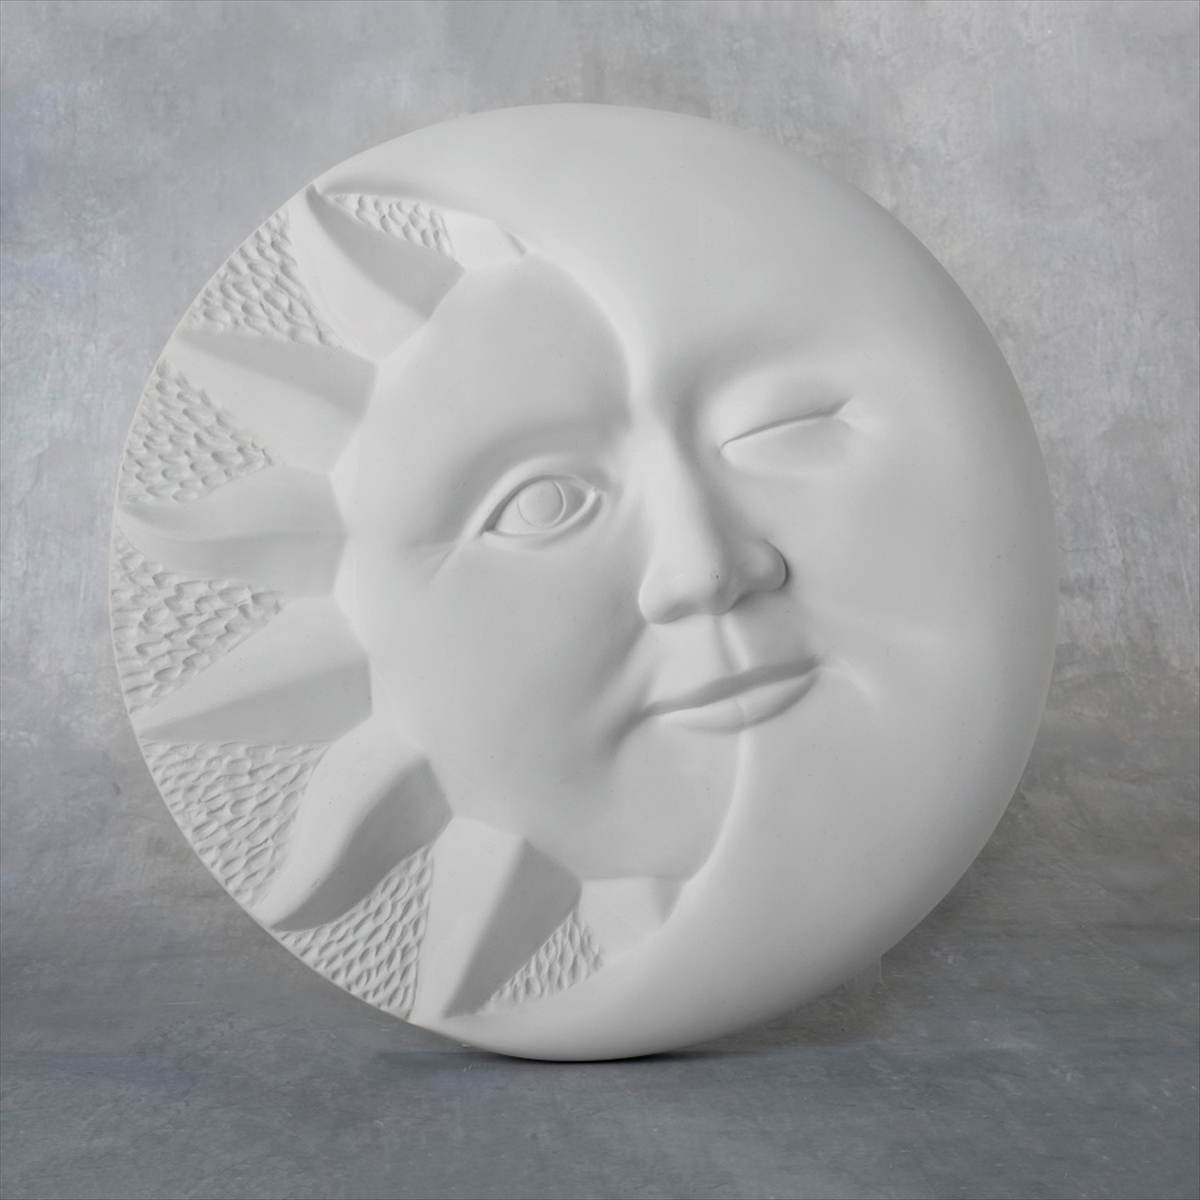 Duncan 38330 Bisque Sun Moon Plaque